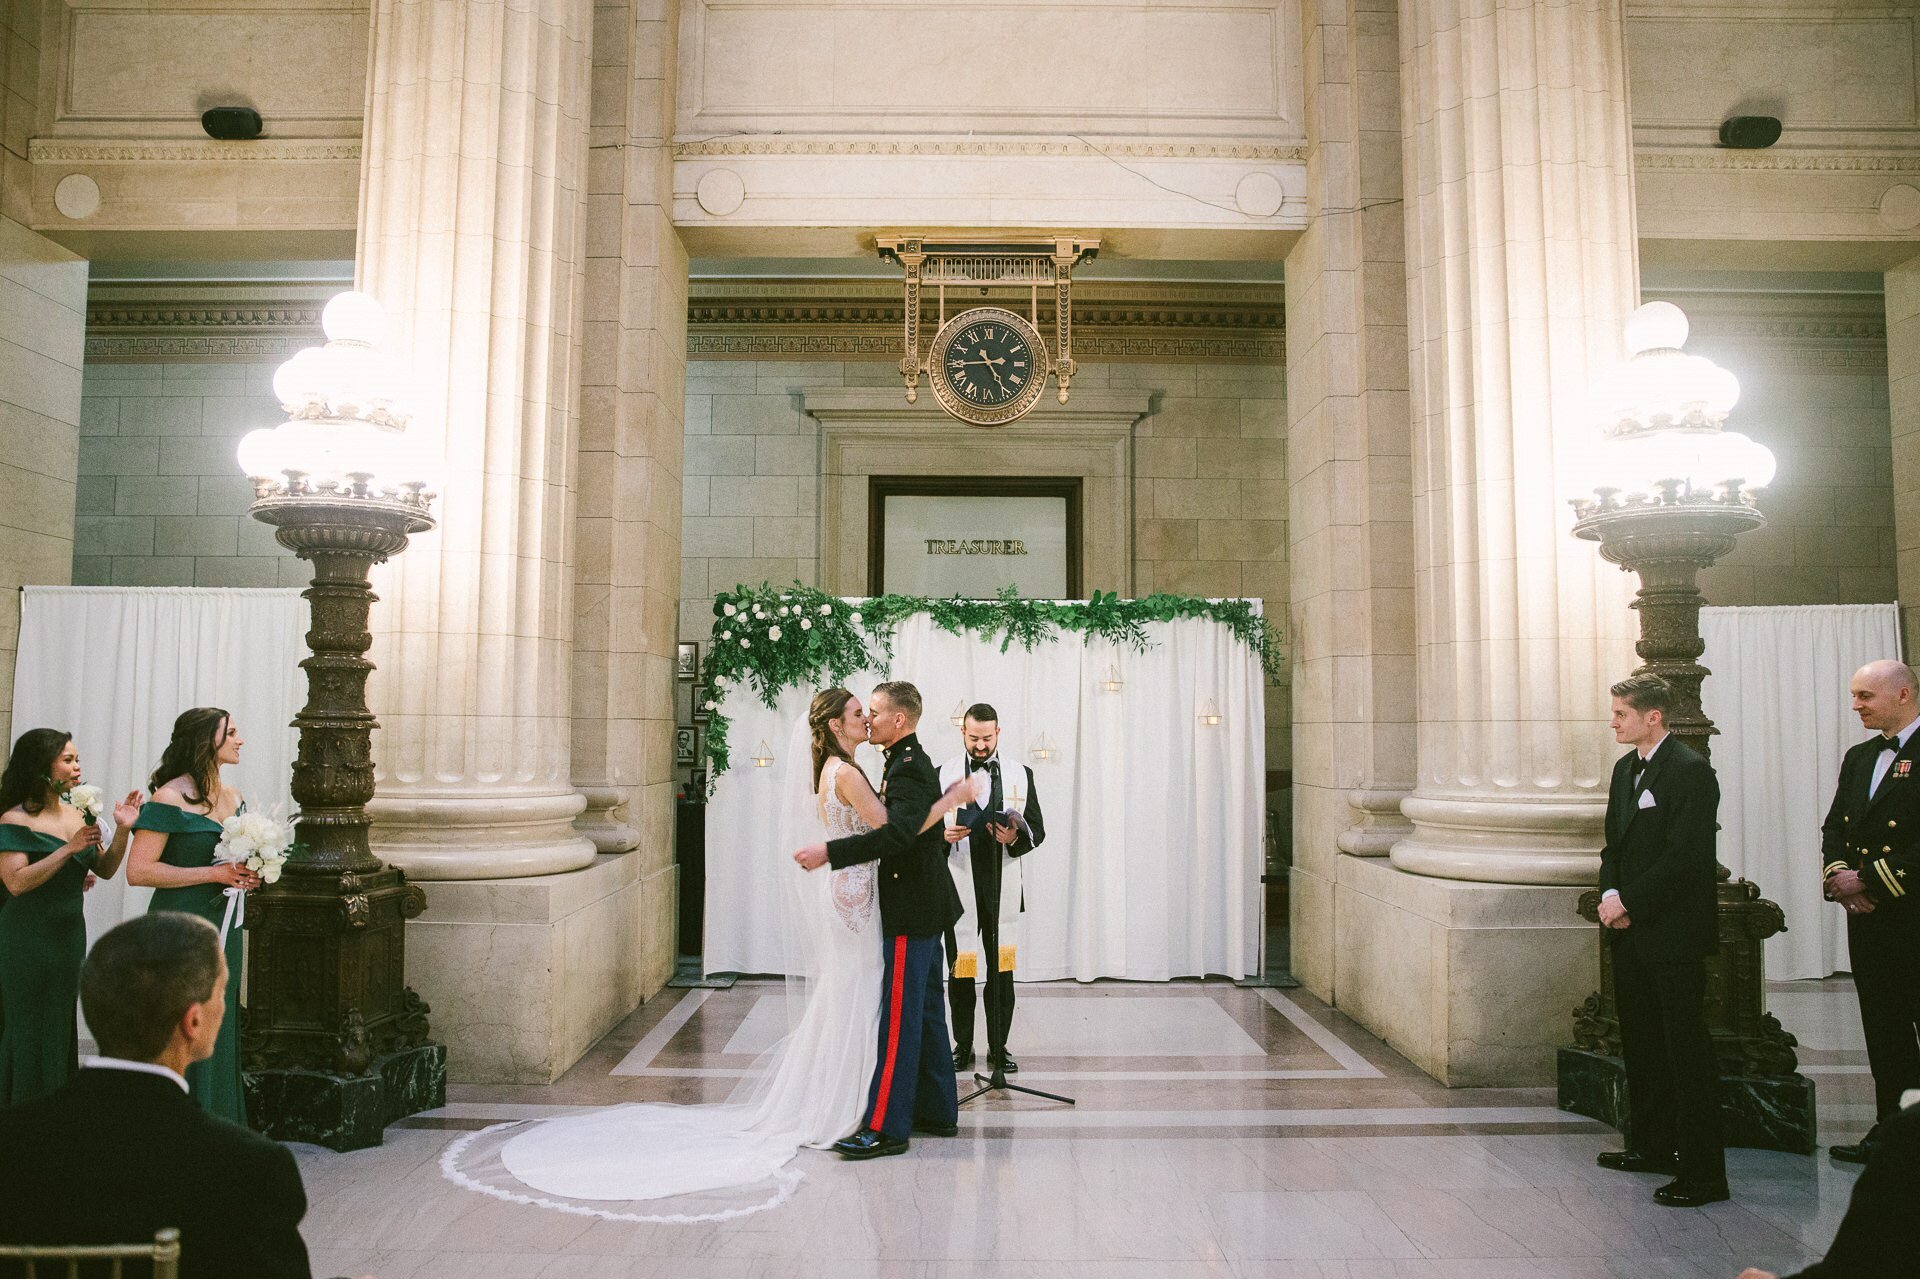 Cleveland City Hall Rotunda Wedding Photos 2 5.jpg